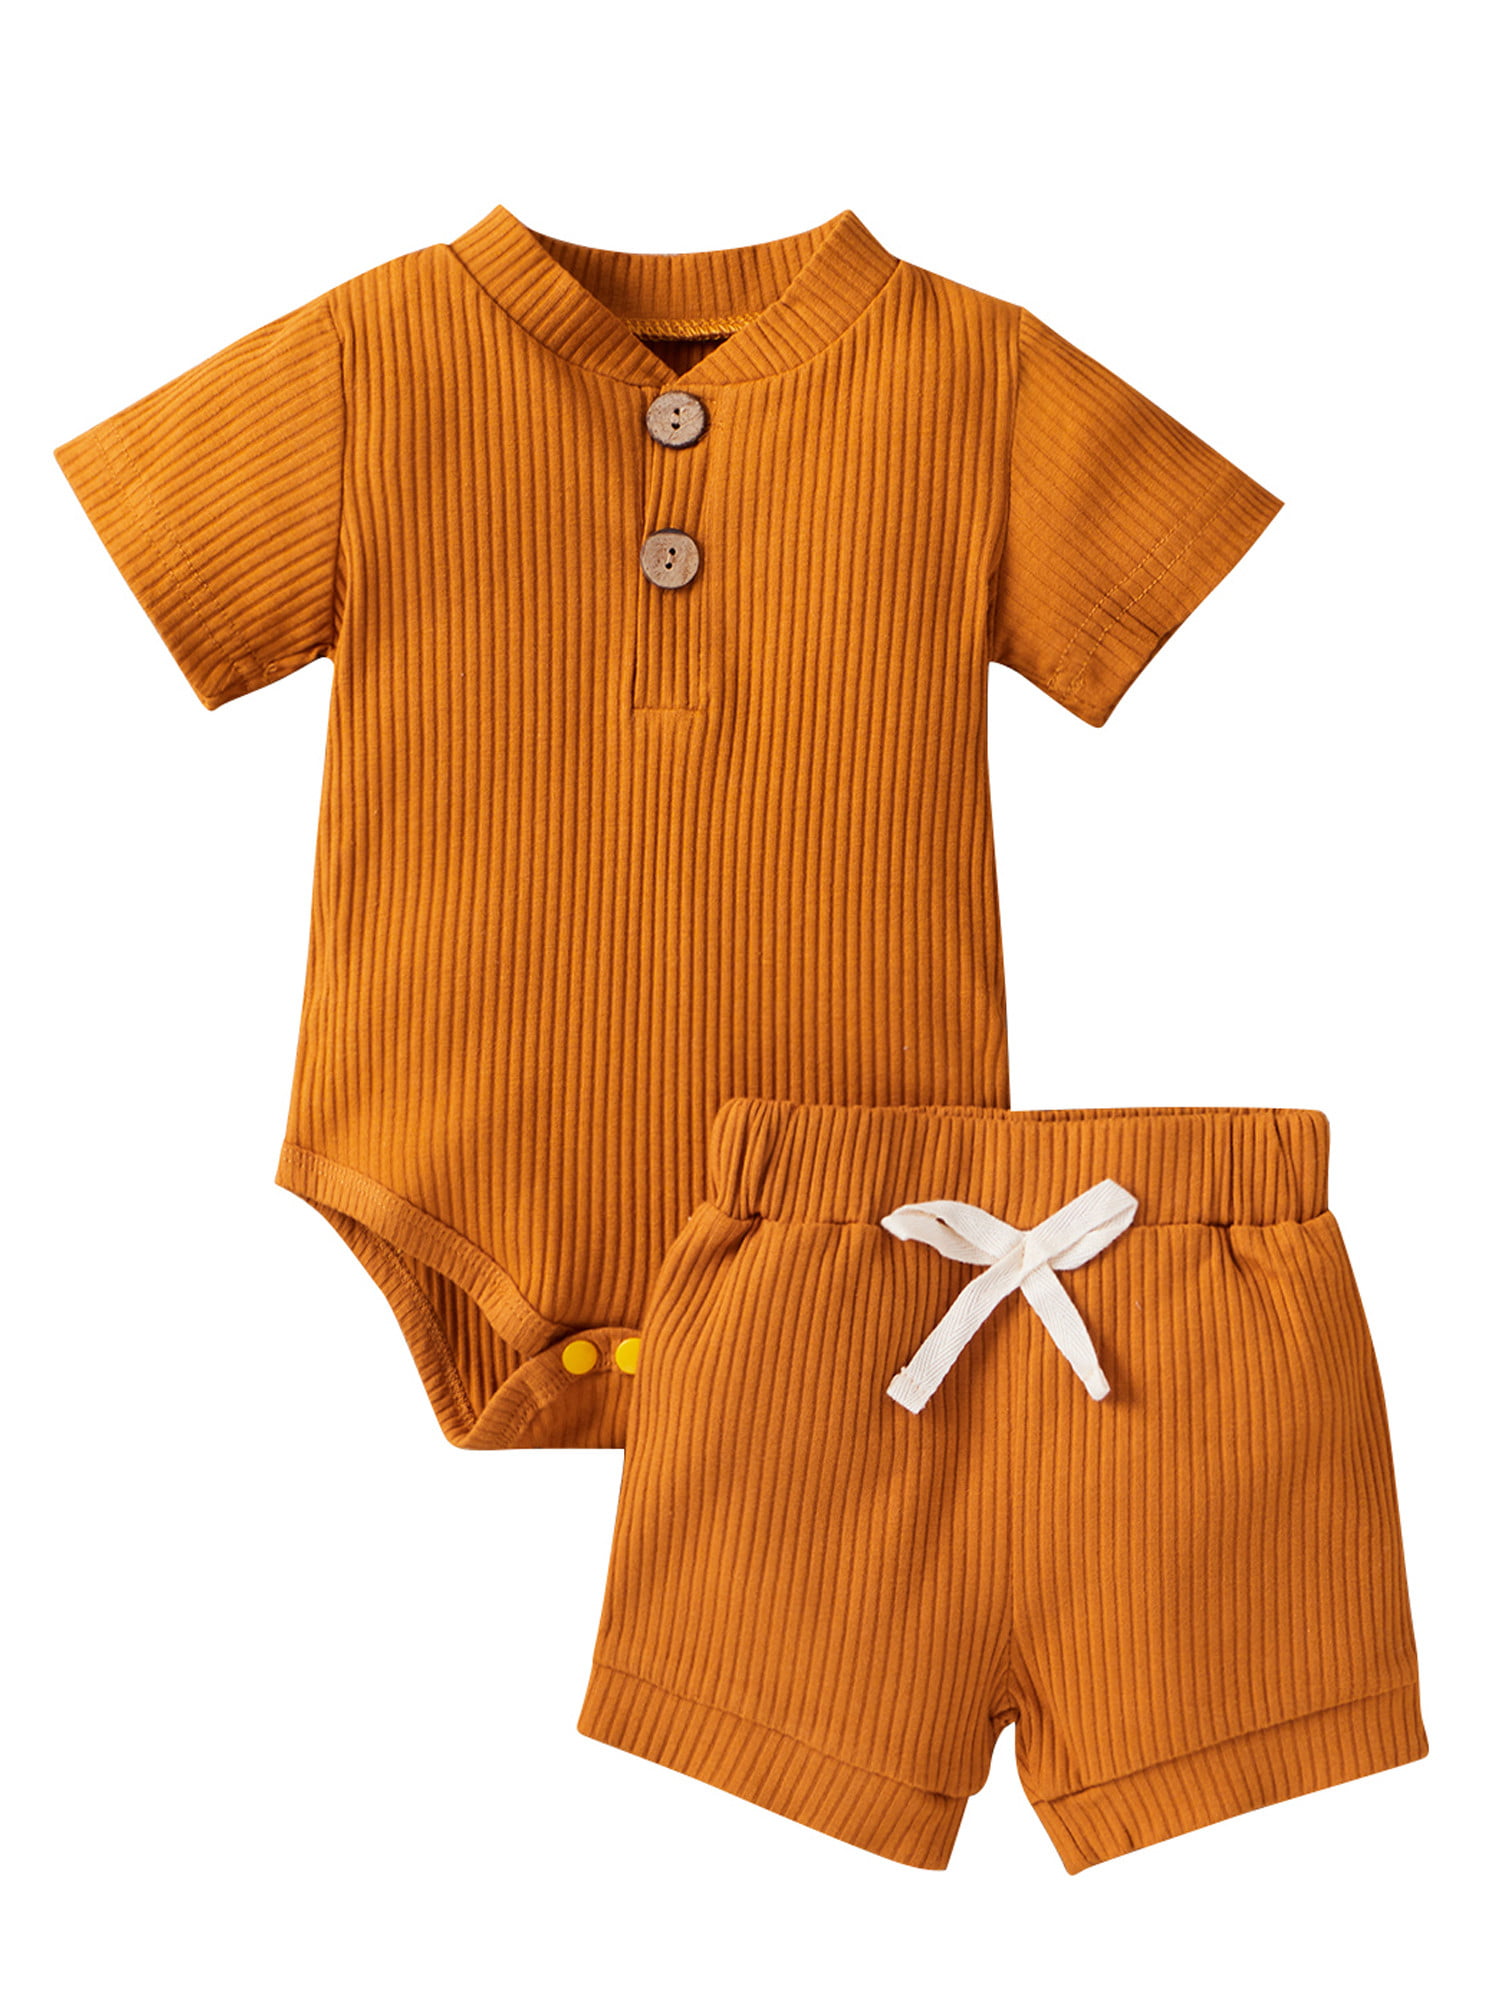 Details about   Newborn Infant Baby Boy Girl Solid Romper Jumpsuit Hat Outfits 2PCS Clothes Set